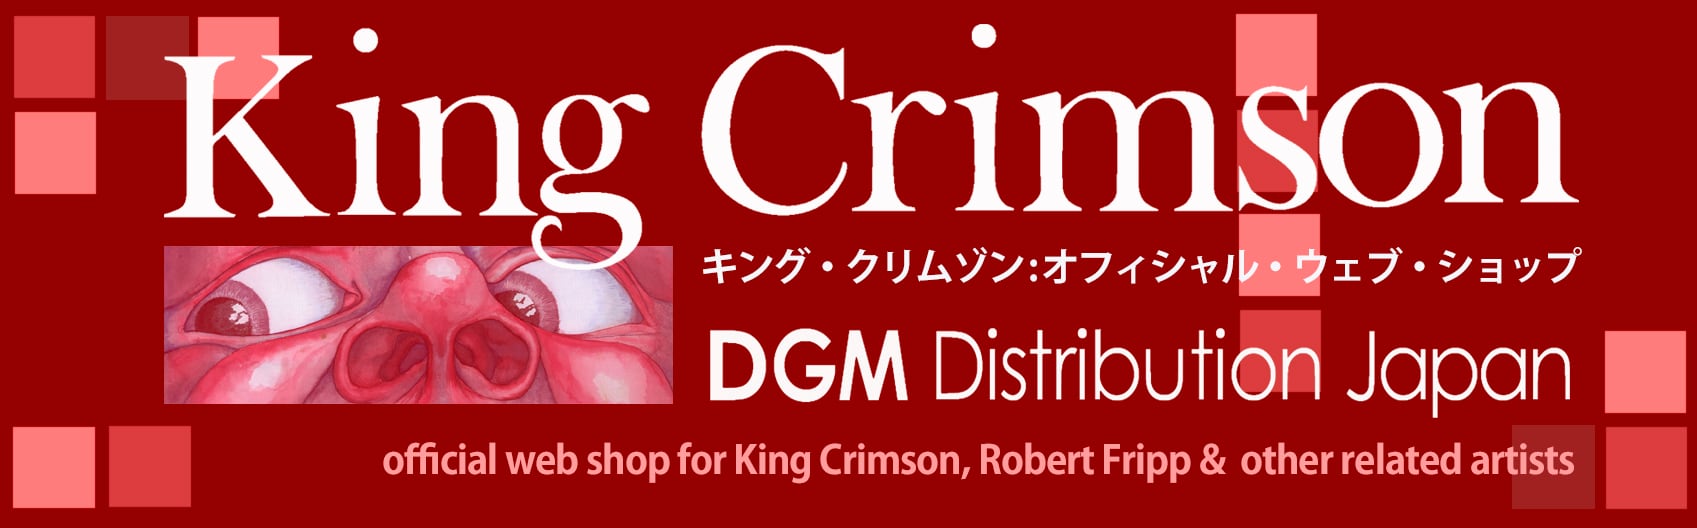 KING CRIMSON SHOP オフィシャル・キング・クリムゾン・ショップ